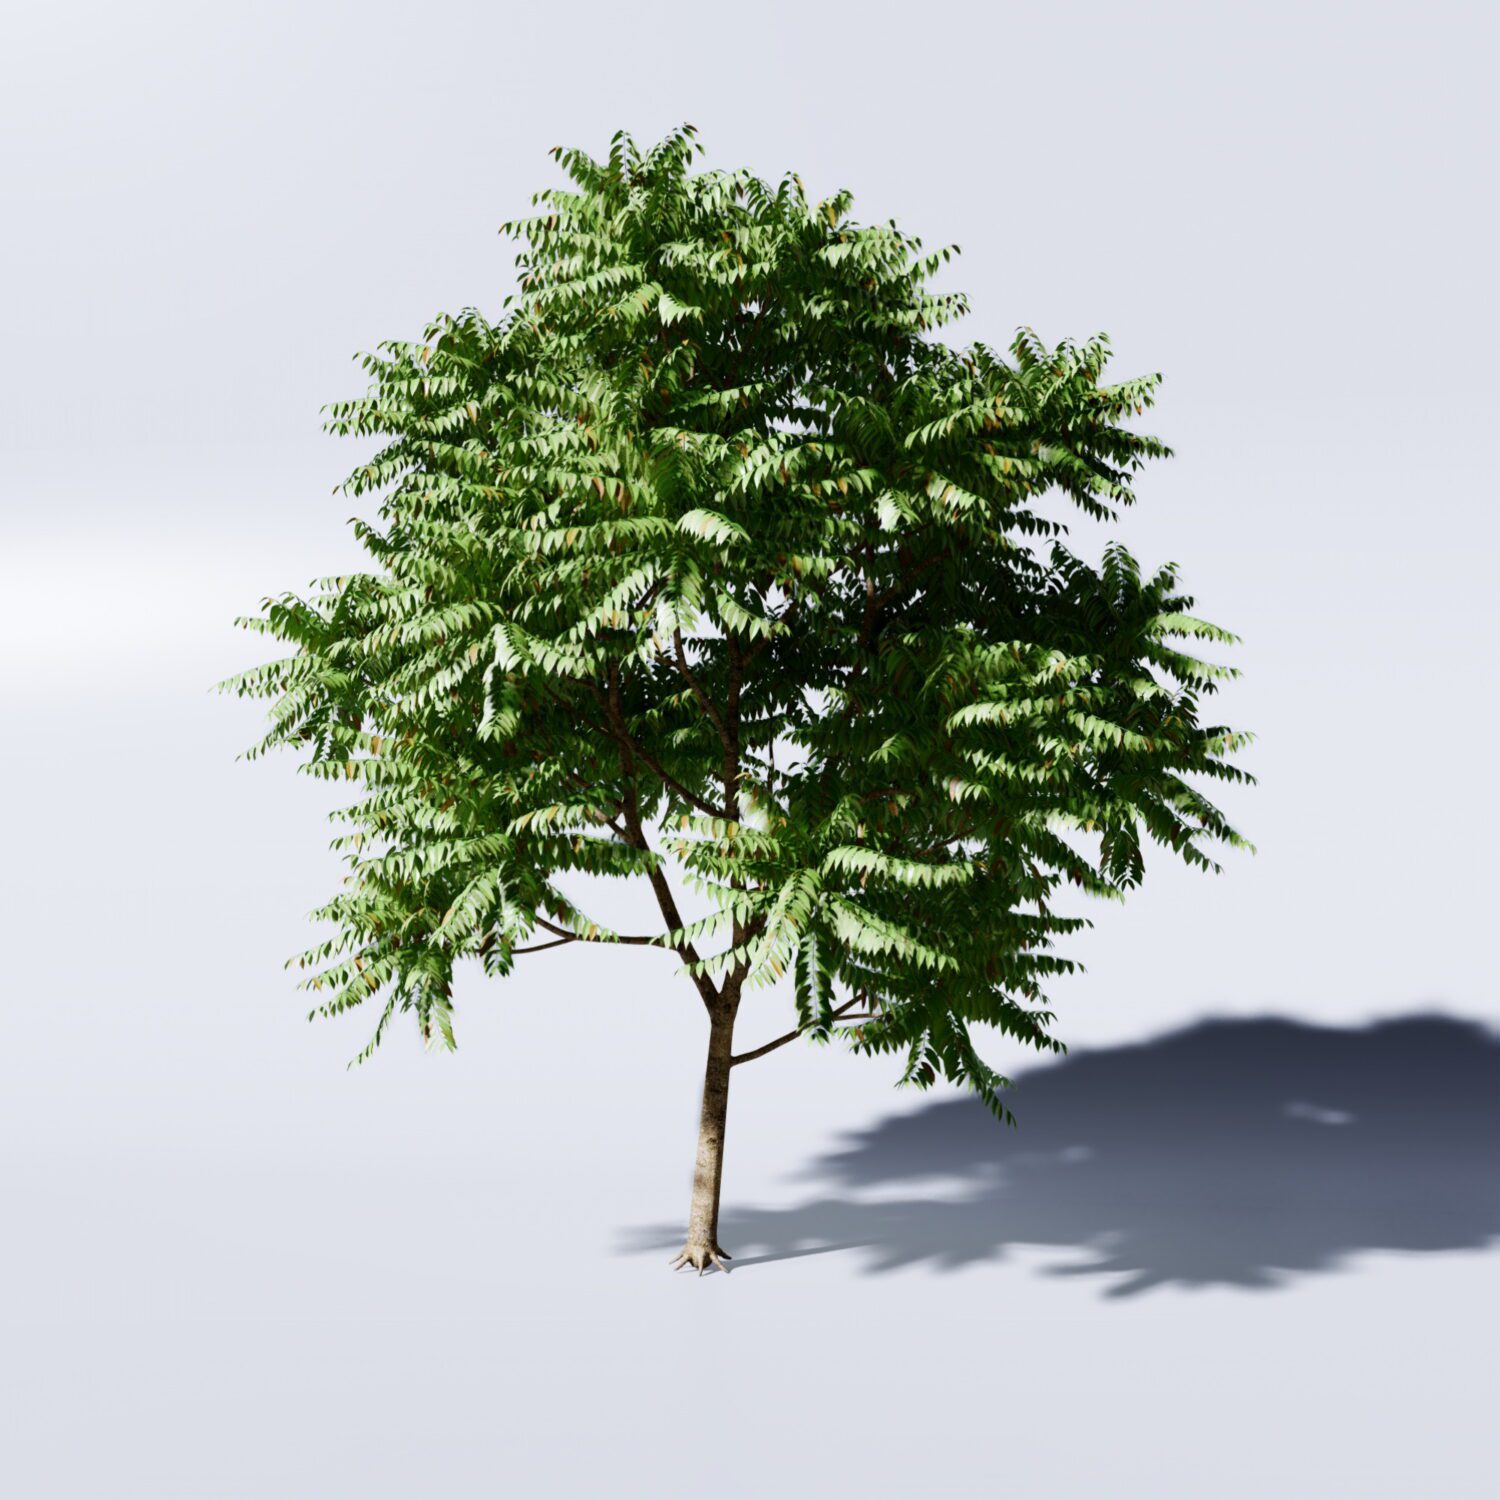 3d Cay Khe (Starfruit tree) Model 407 Free Download